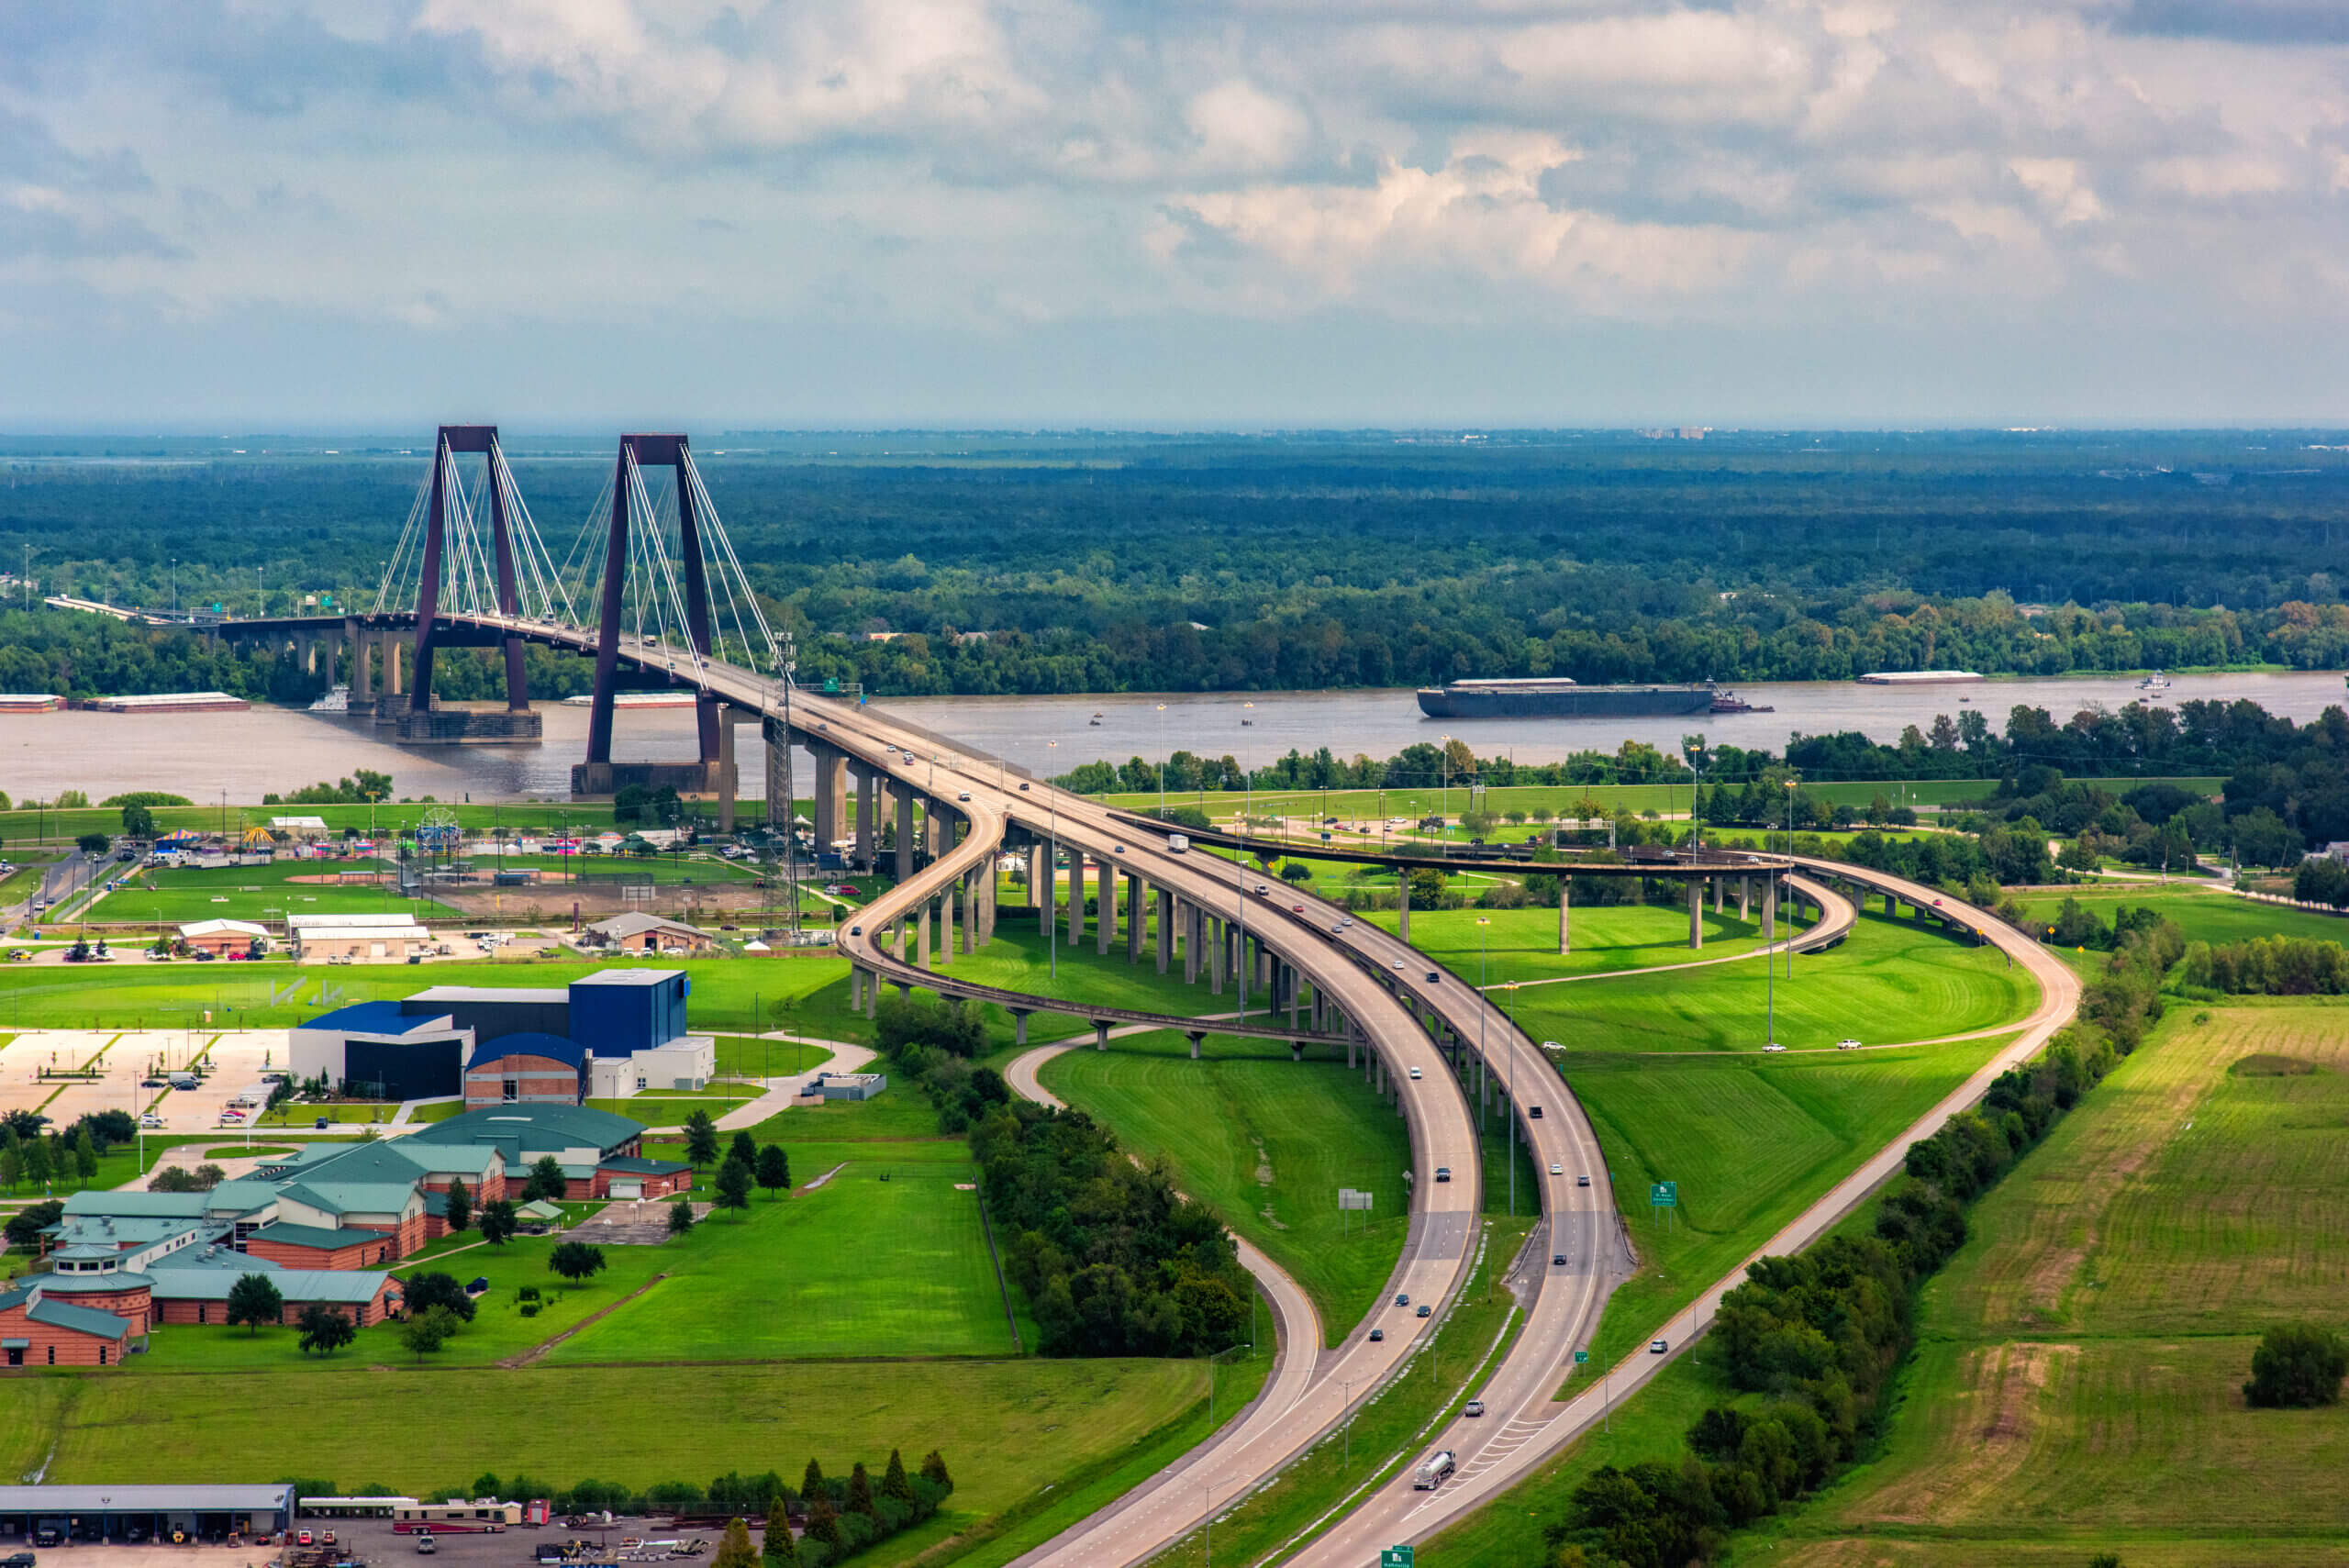 Overview of Hale Boggs Memorial Bridge in the New Orleans Metro region.